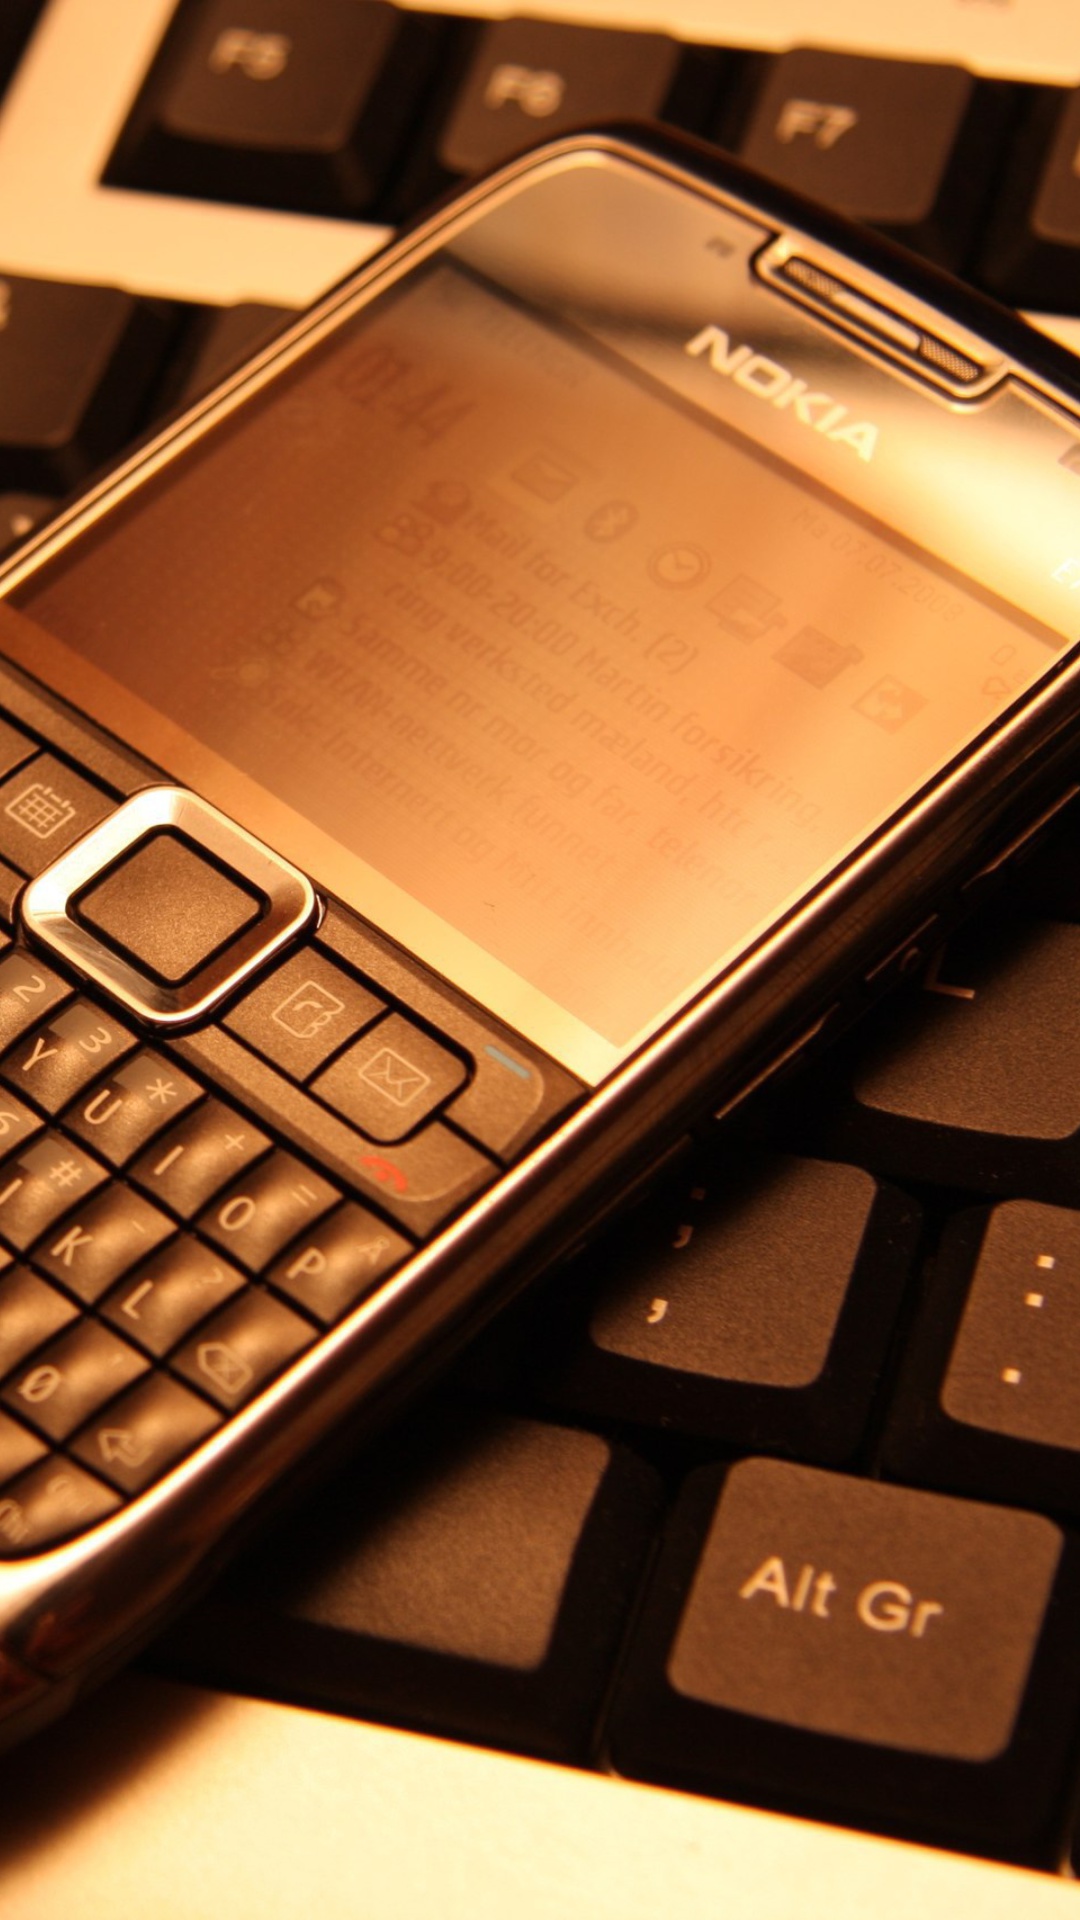 Nokia E71 on Computer Keyboard screenshot #1 1080x1920